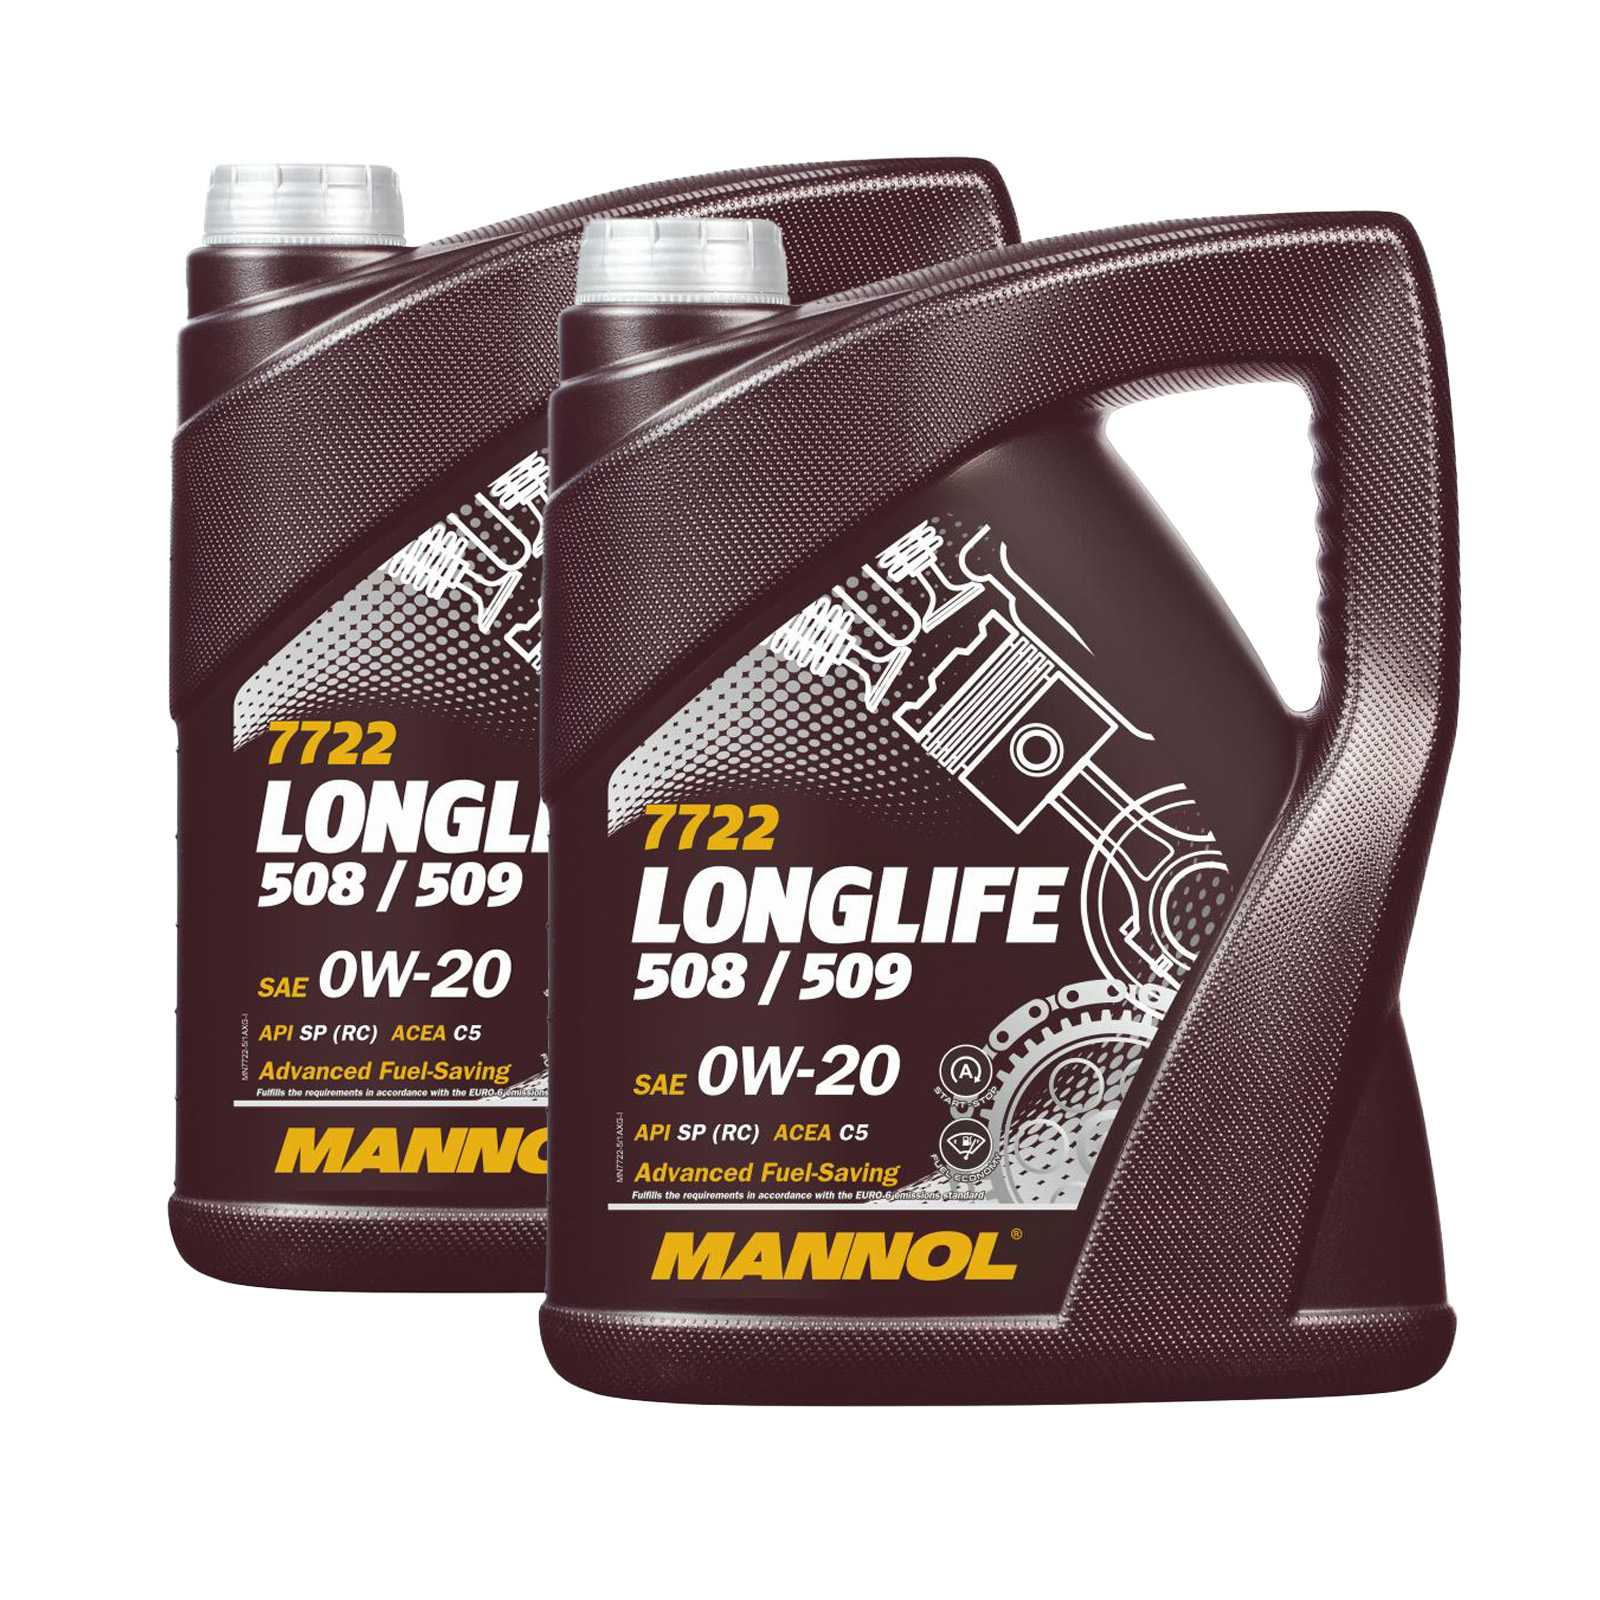 10 Liter (2x5) MANNOL Longlife Motoröl 508/509 MN7722 SAE 0W-20 API SP (RC) 